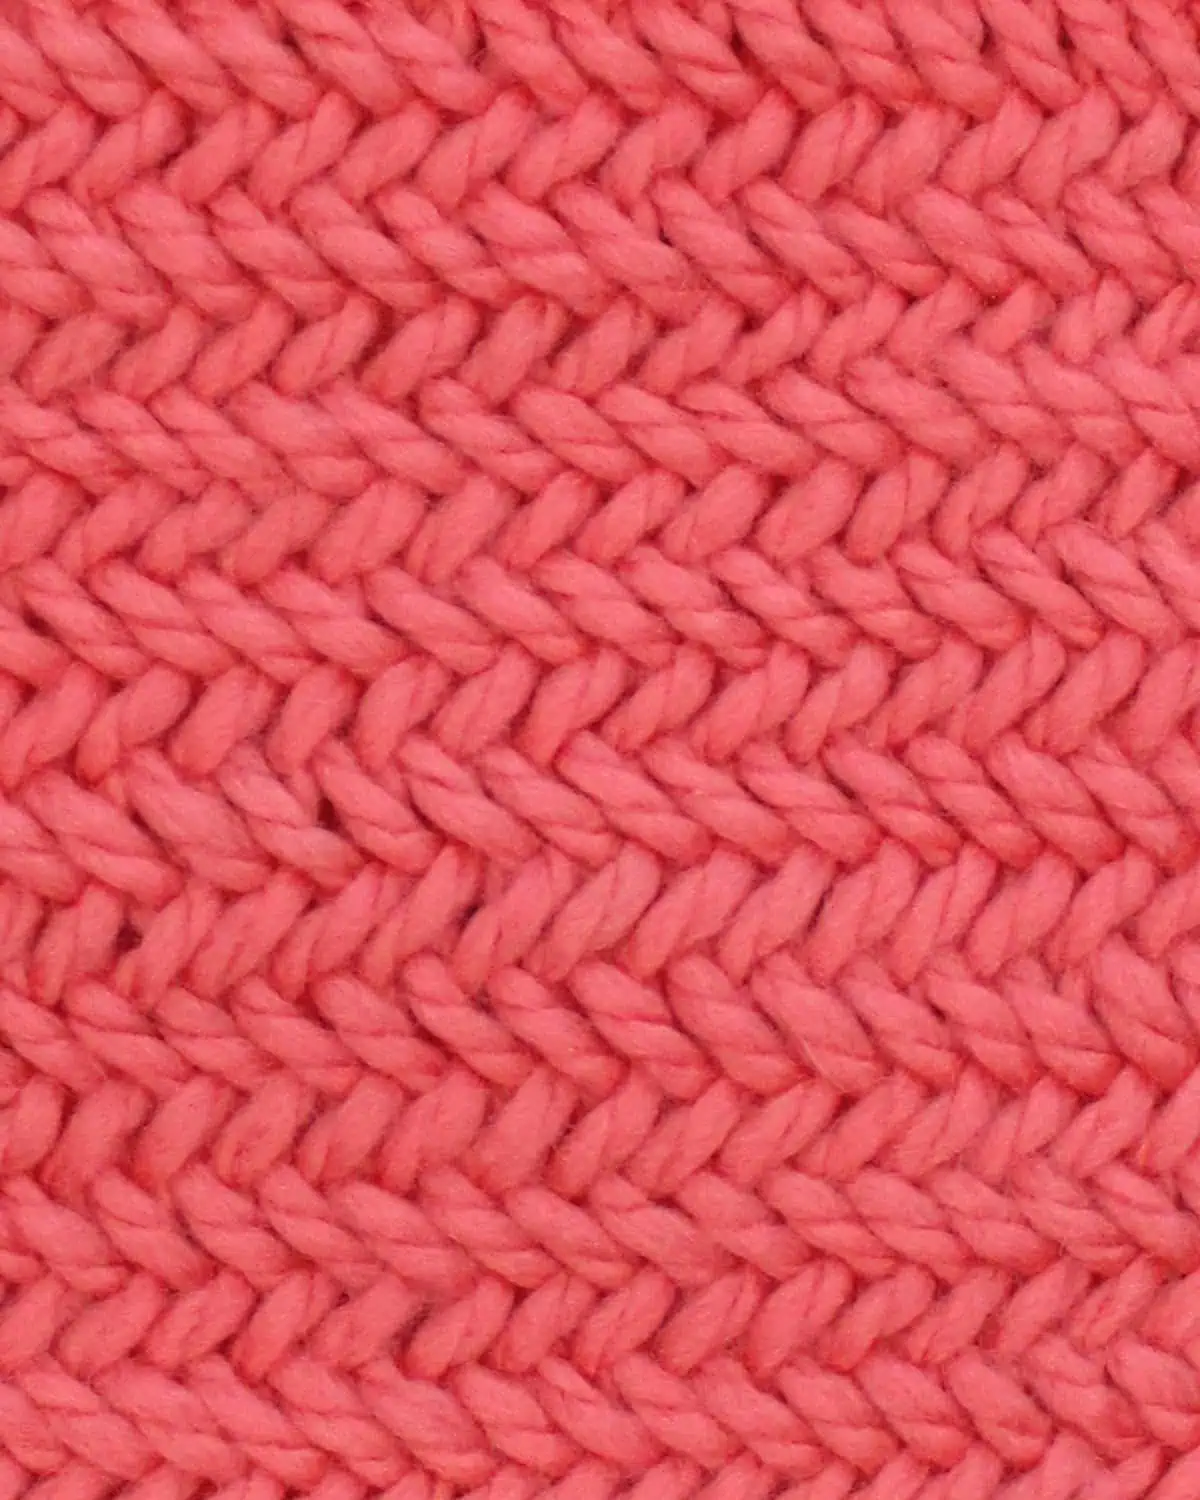 Horizontal Herringbone knit stitch pattern in orange colored yarn.